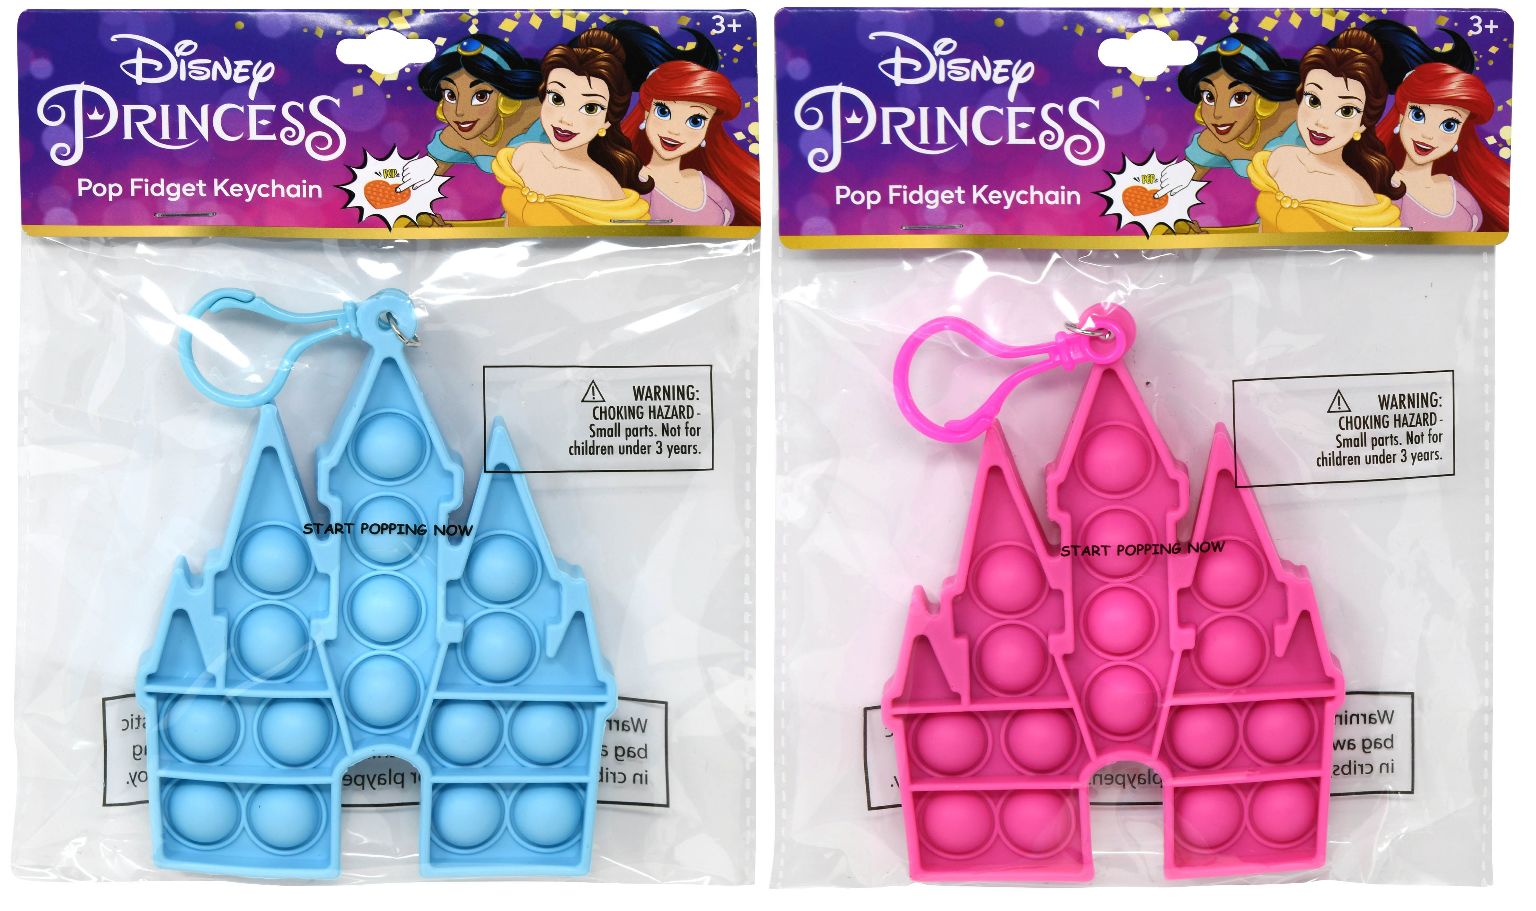 Disney Kitchen Towel Potholder Set - Pricesses - Pink